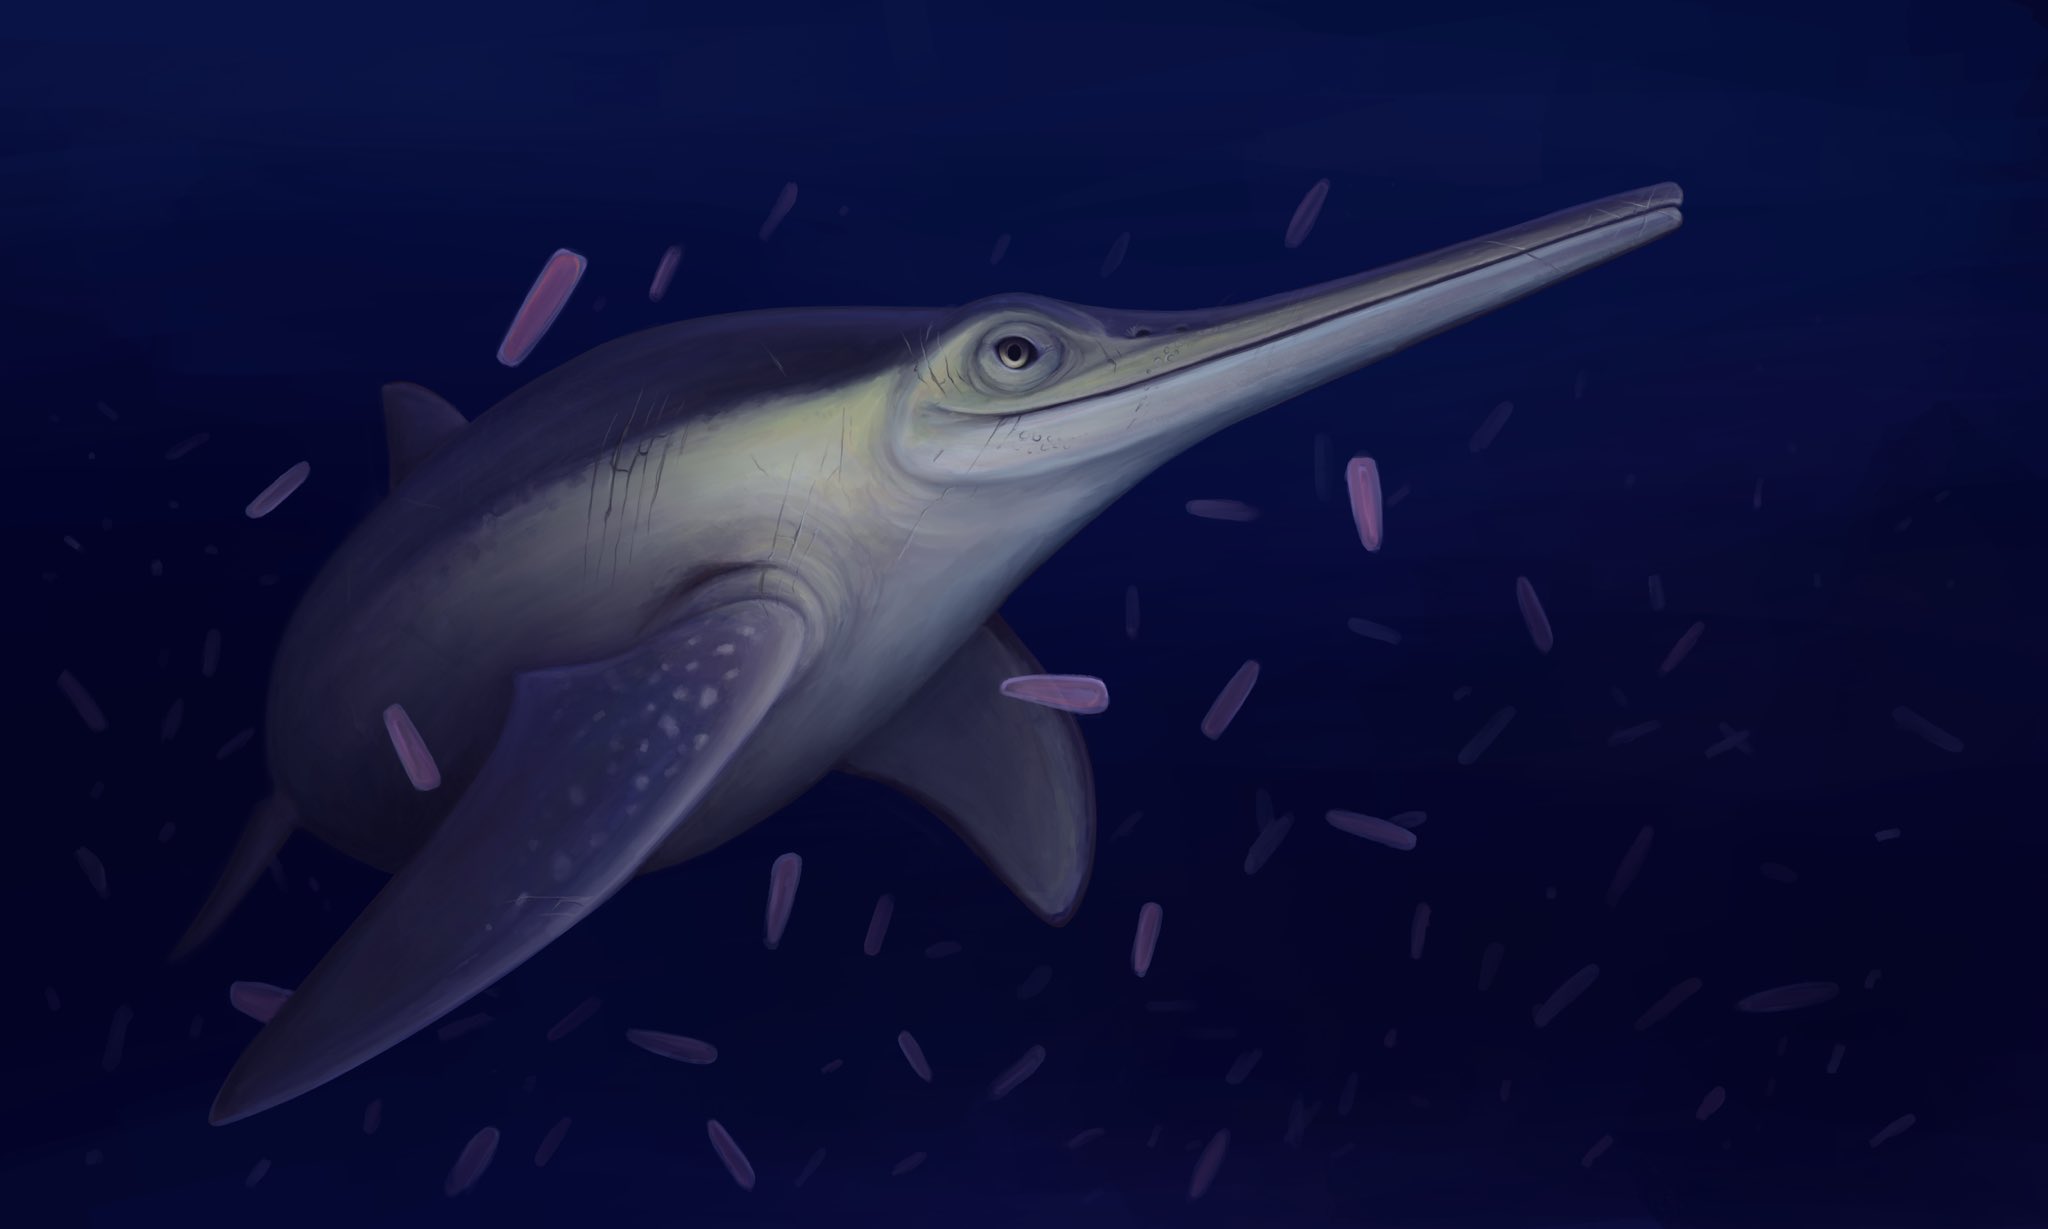 A dark blue and silver platypterygiine ichthyosaur swims through a cloud of pink, glowing pyrosomes in a deep blue sea.